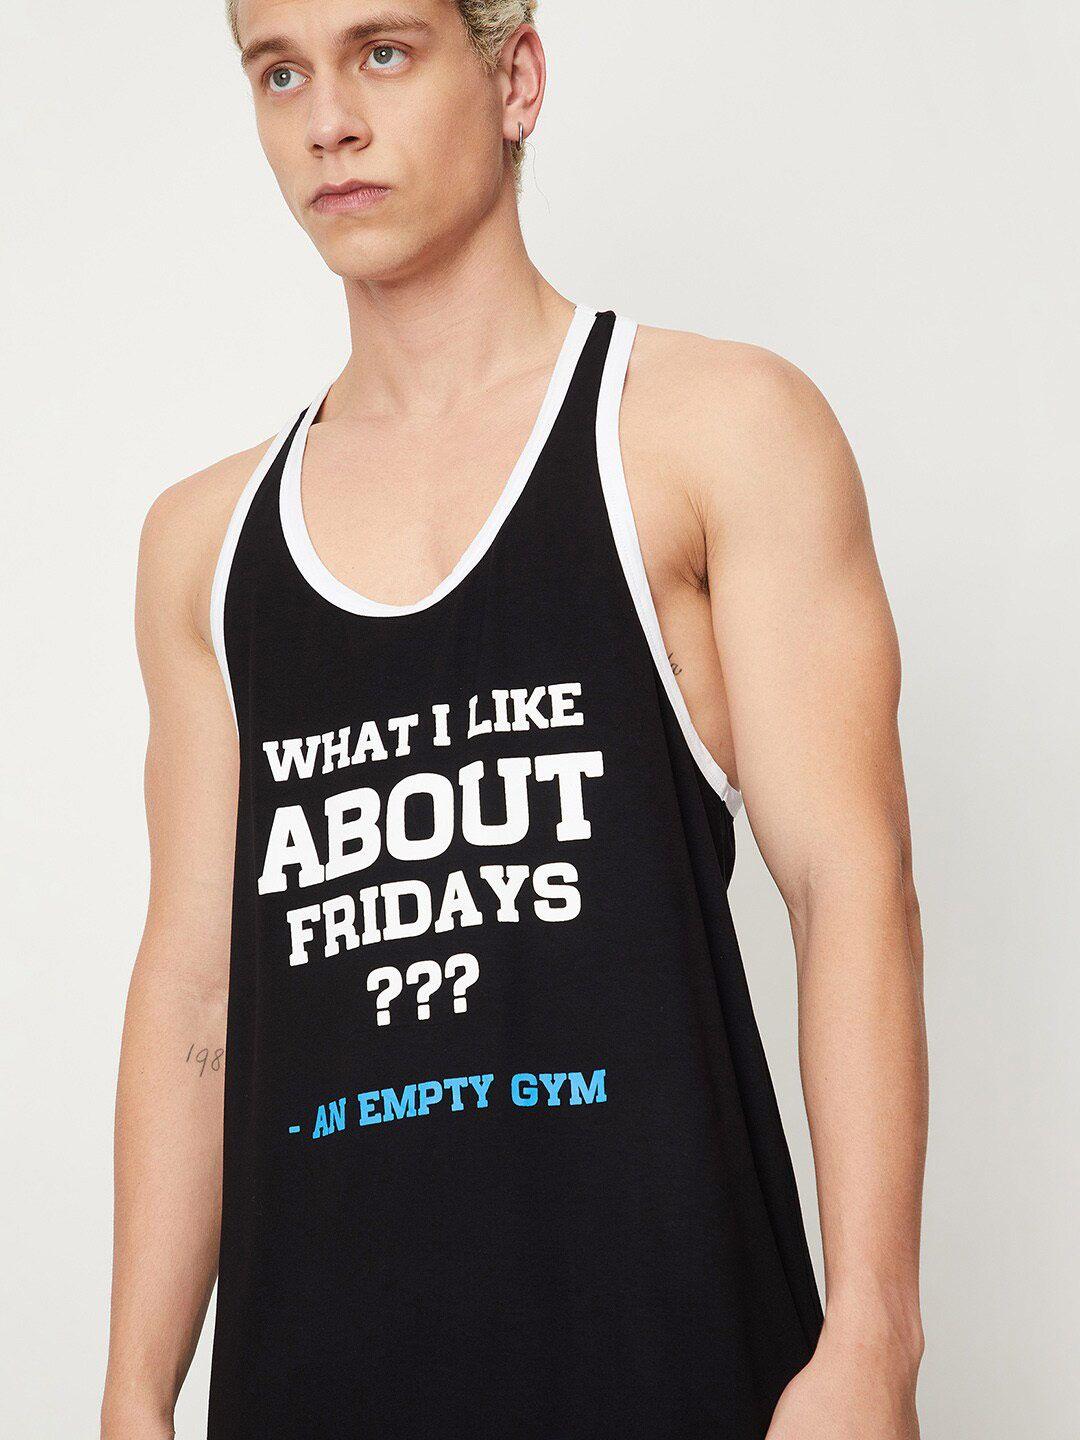 max typography printed sleeveless training or gym t-shirt